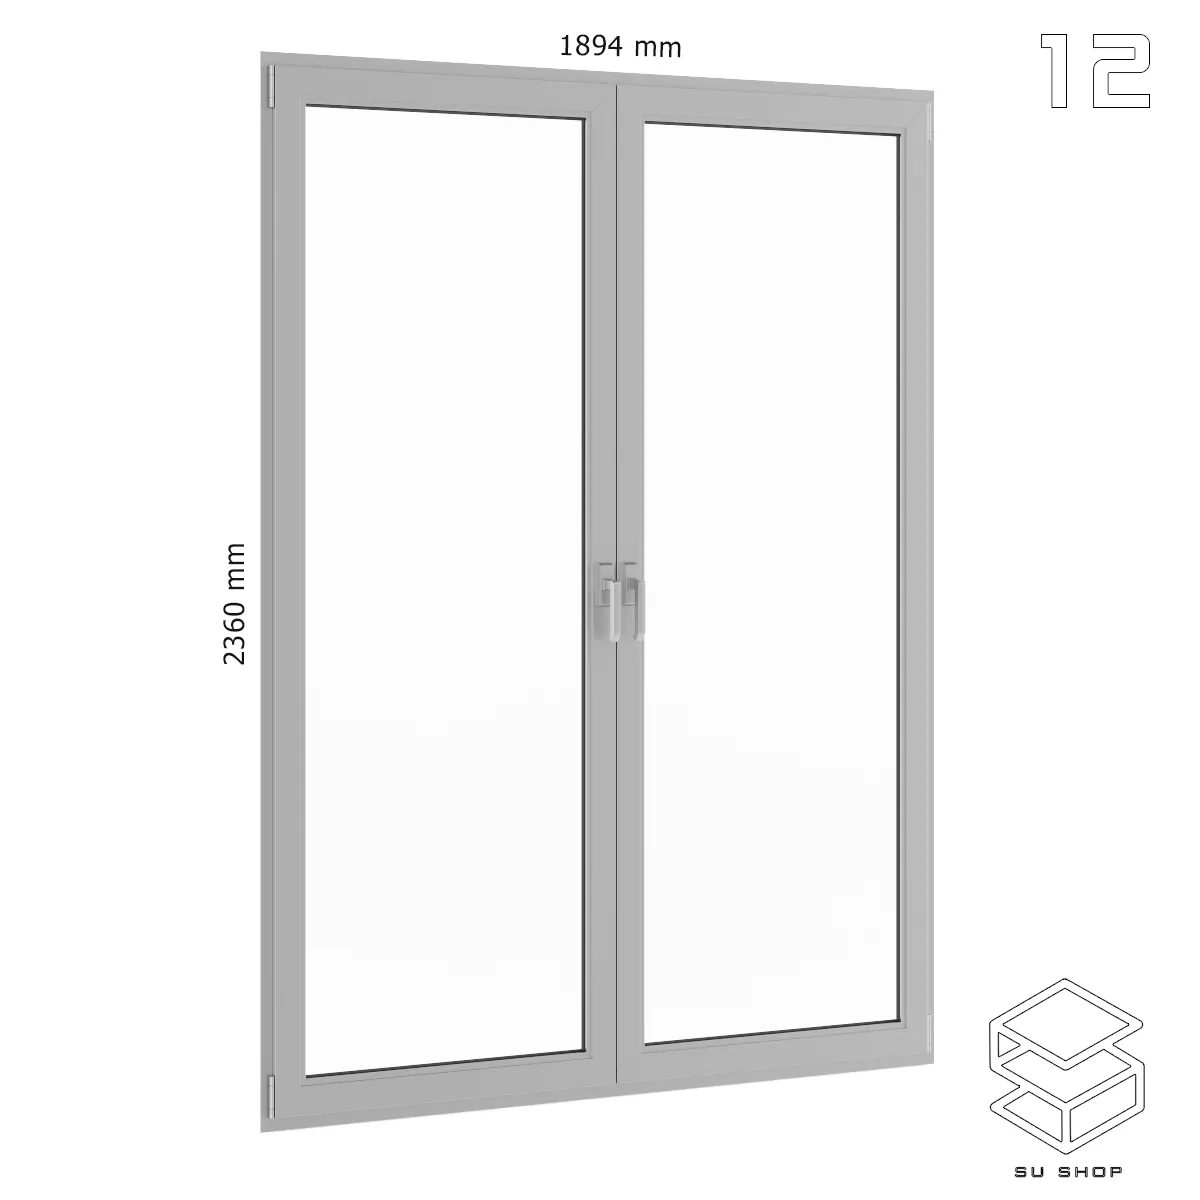 MODERN WINDOWS - SKETCHUP 3D MODEL - VRAY OR ENSCAPE - ID16751